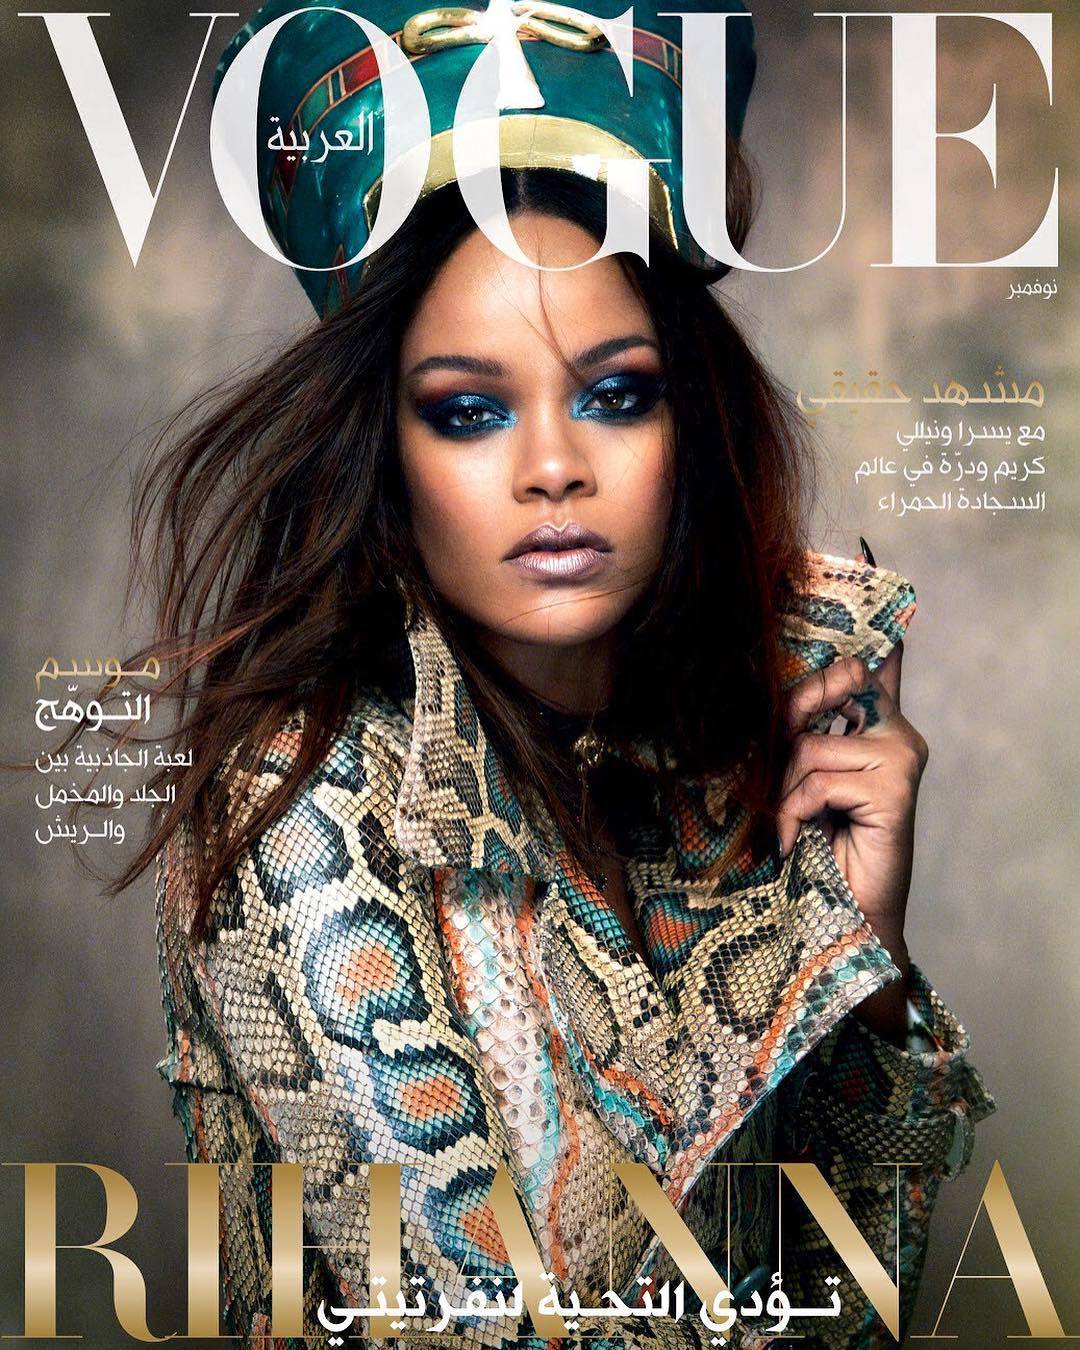 Rihanna come Nefertiti su Vogue. Ma sui social è già polemica